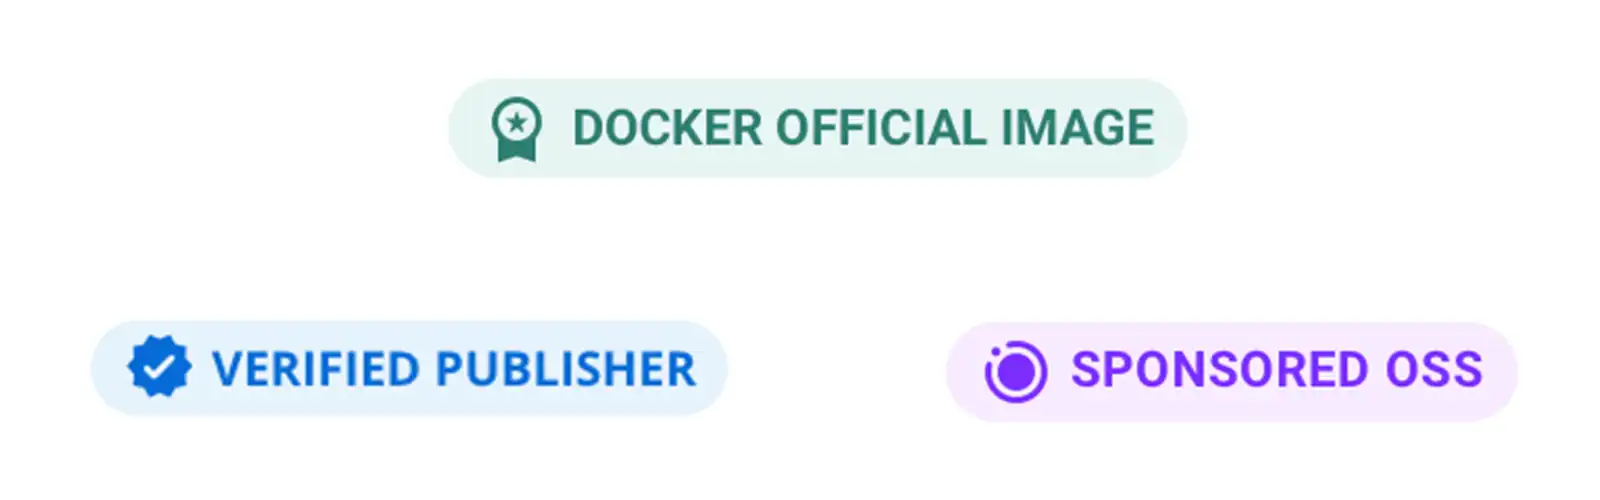 Docker trusted content badges